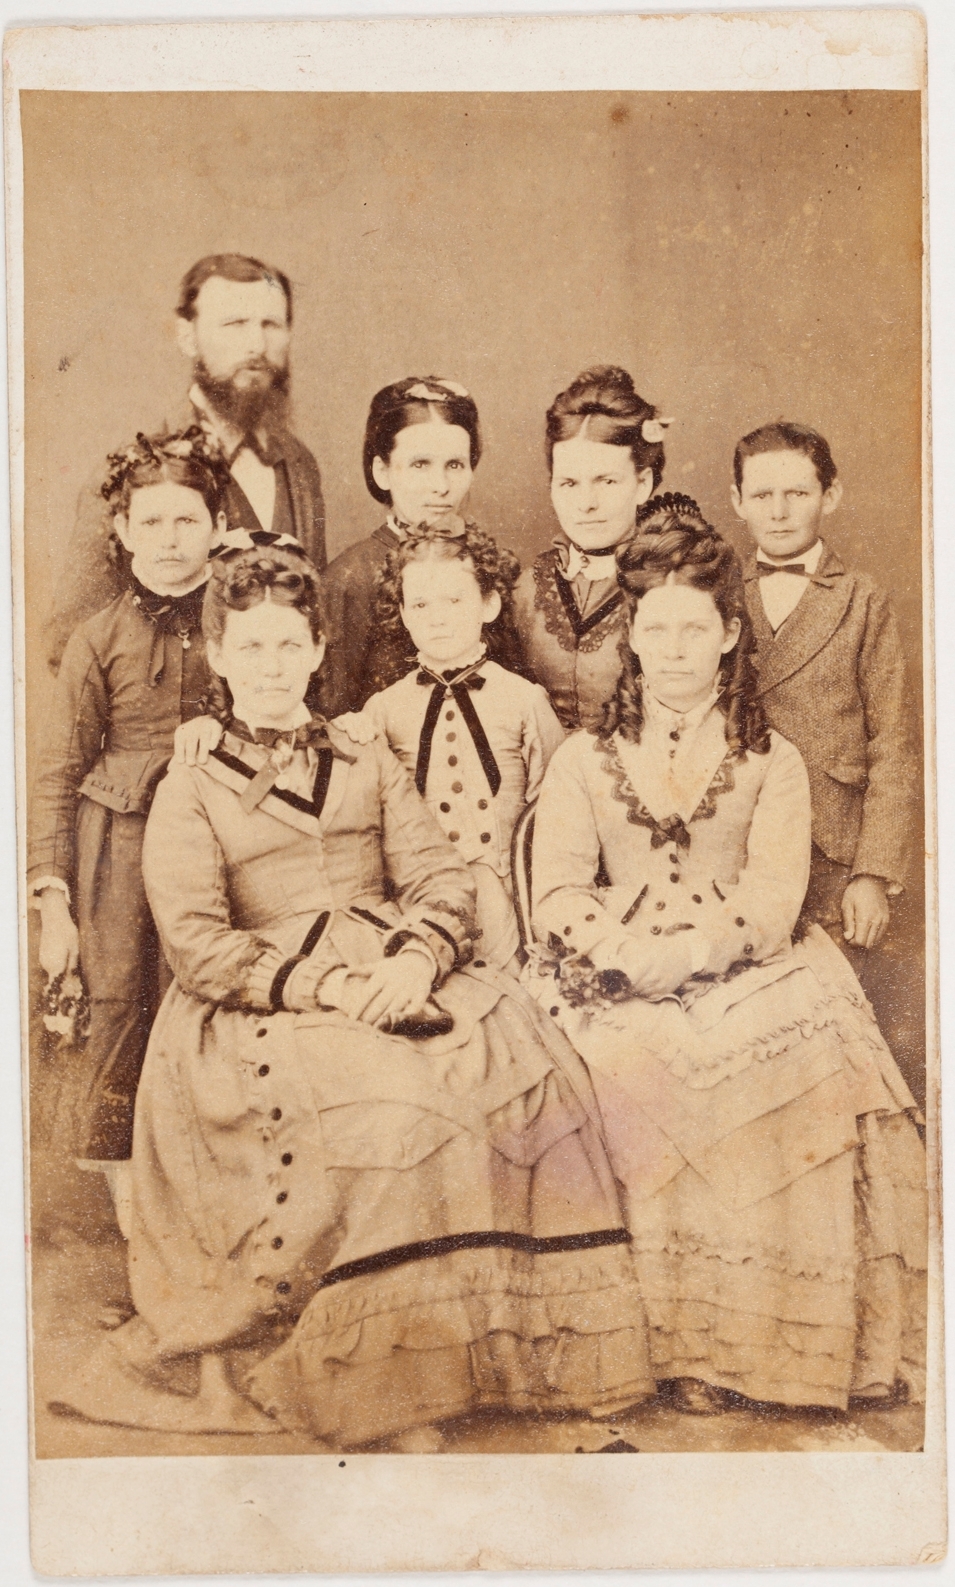 The 8 children of Robert Thorburn and his wife Jessie Catherine Thorburn, nee McKenzie, around 1872 / photographer unknown